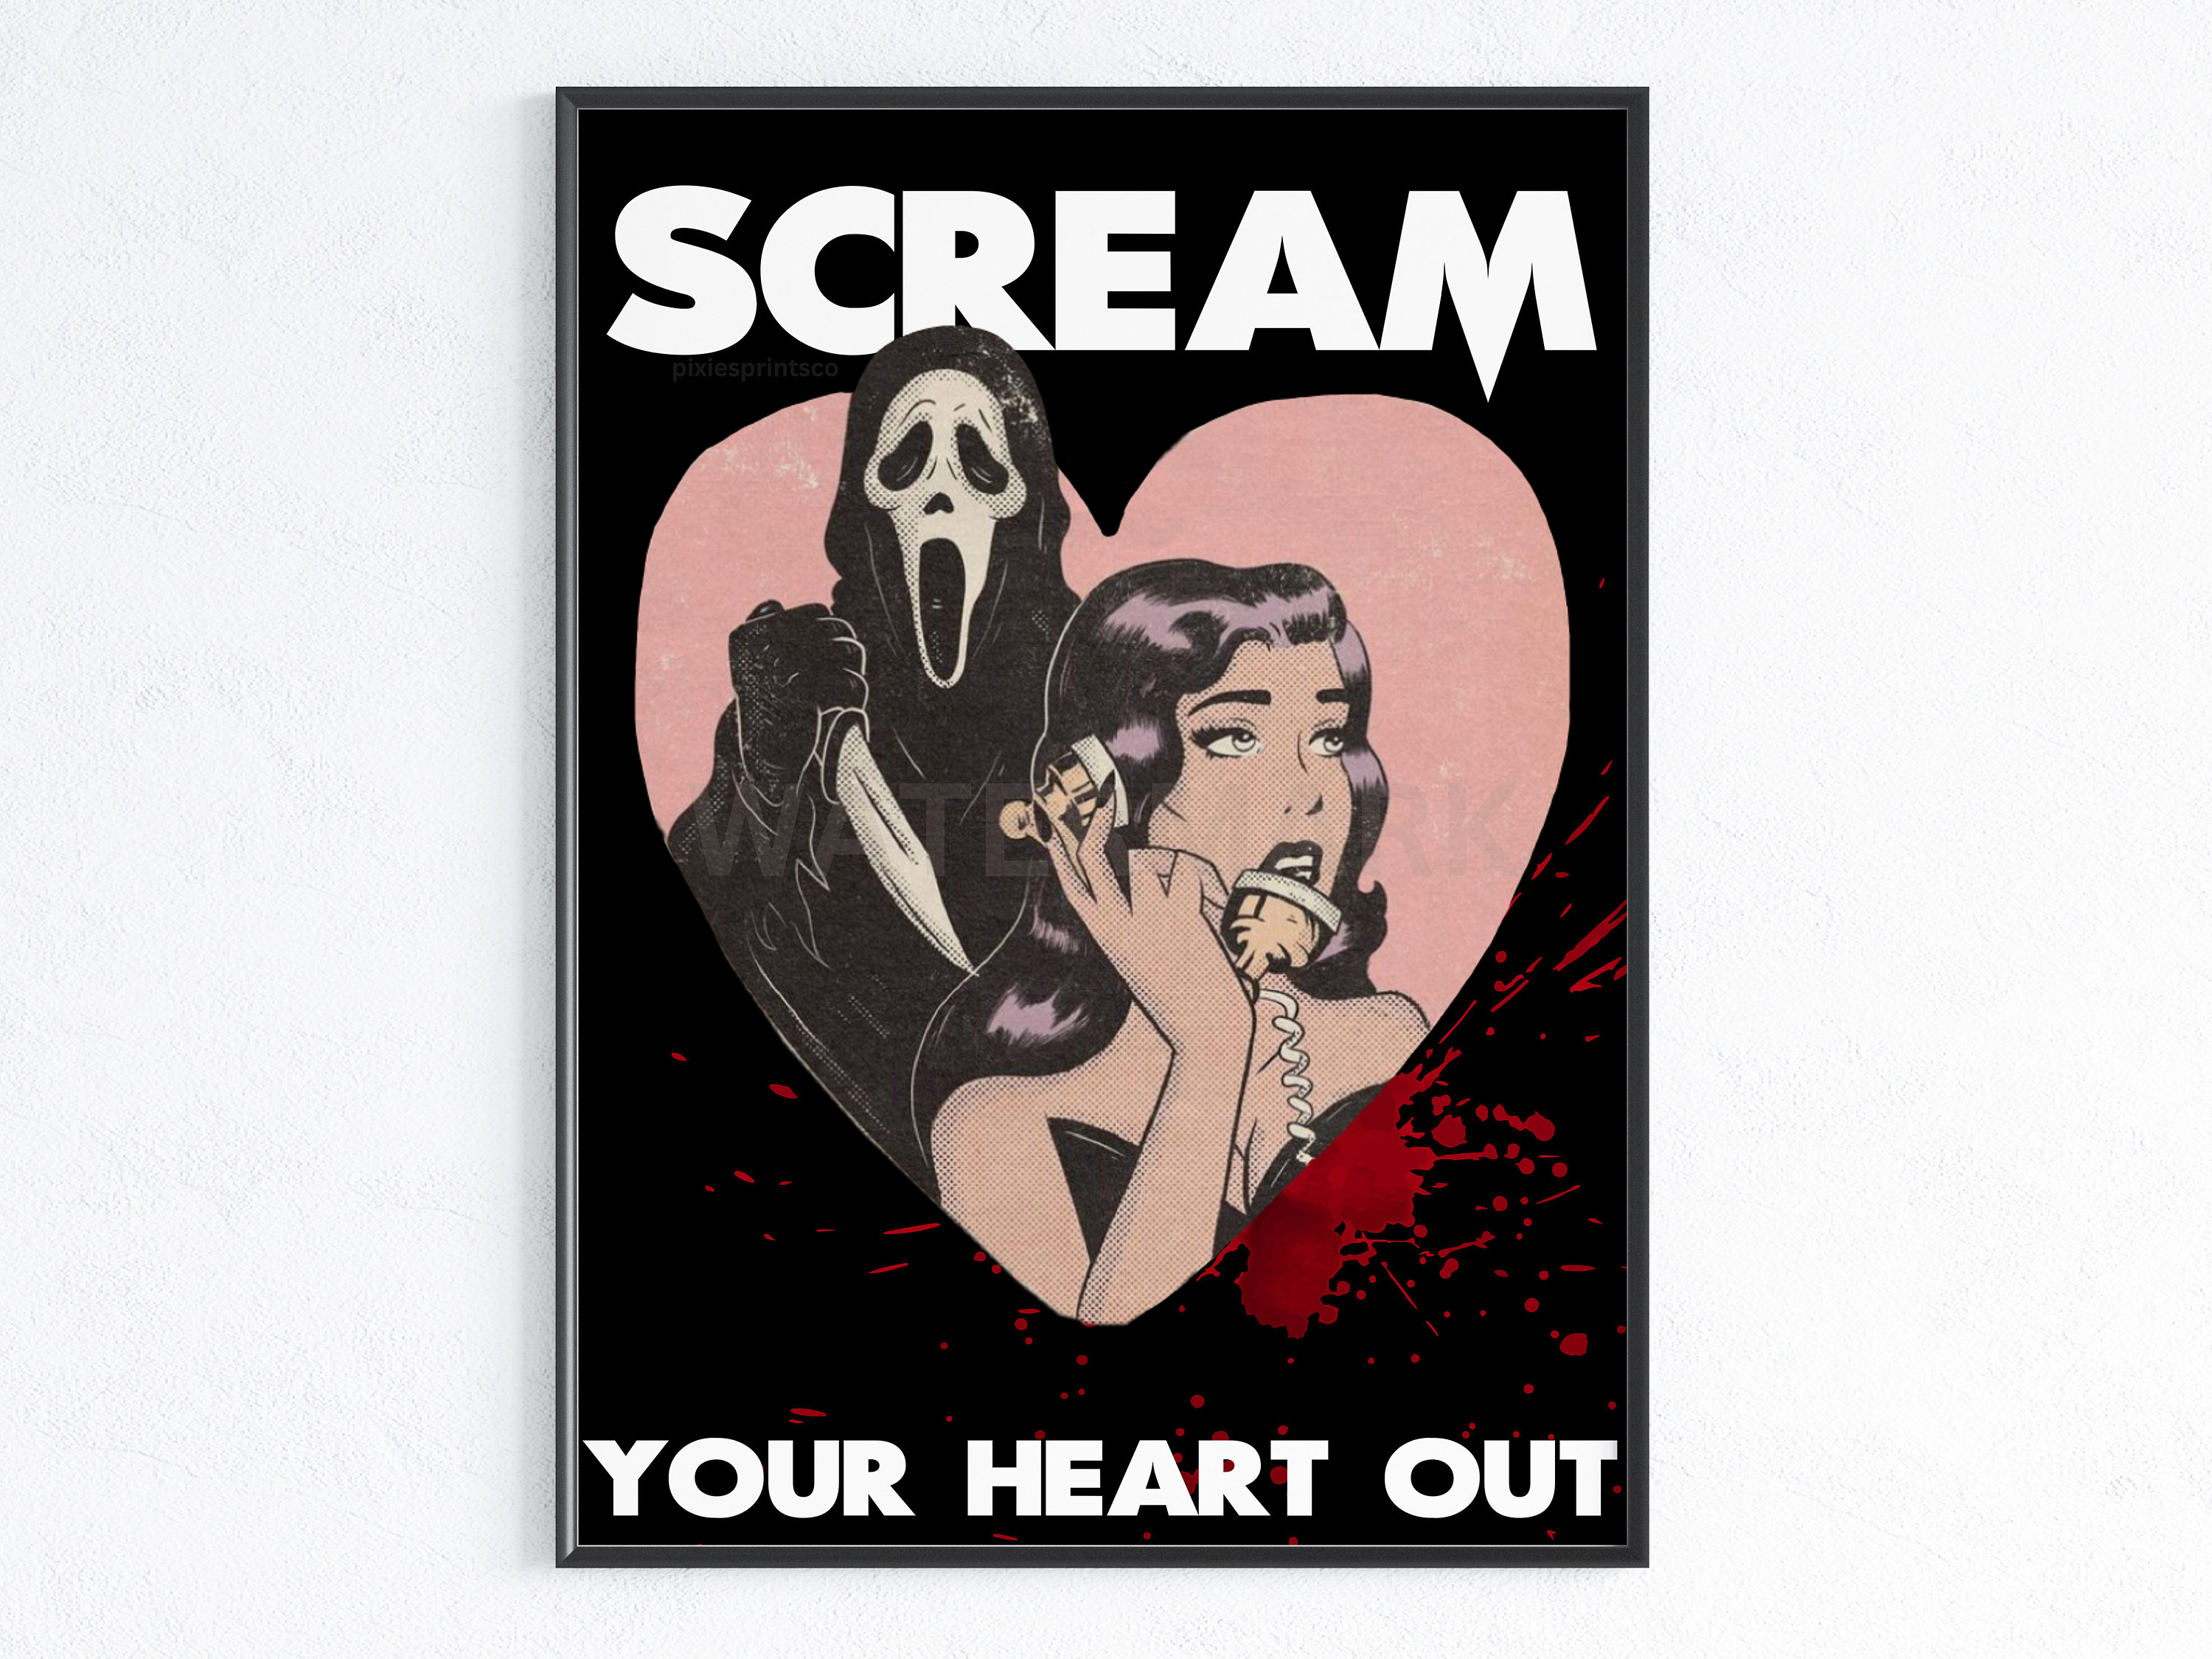 SCREAM 6 - Ghostface takes Manhattan 11x17 Poster